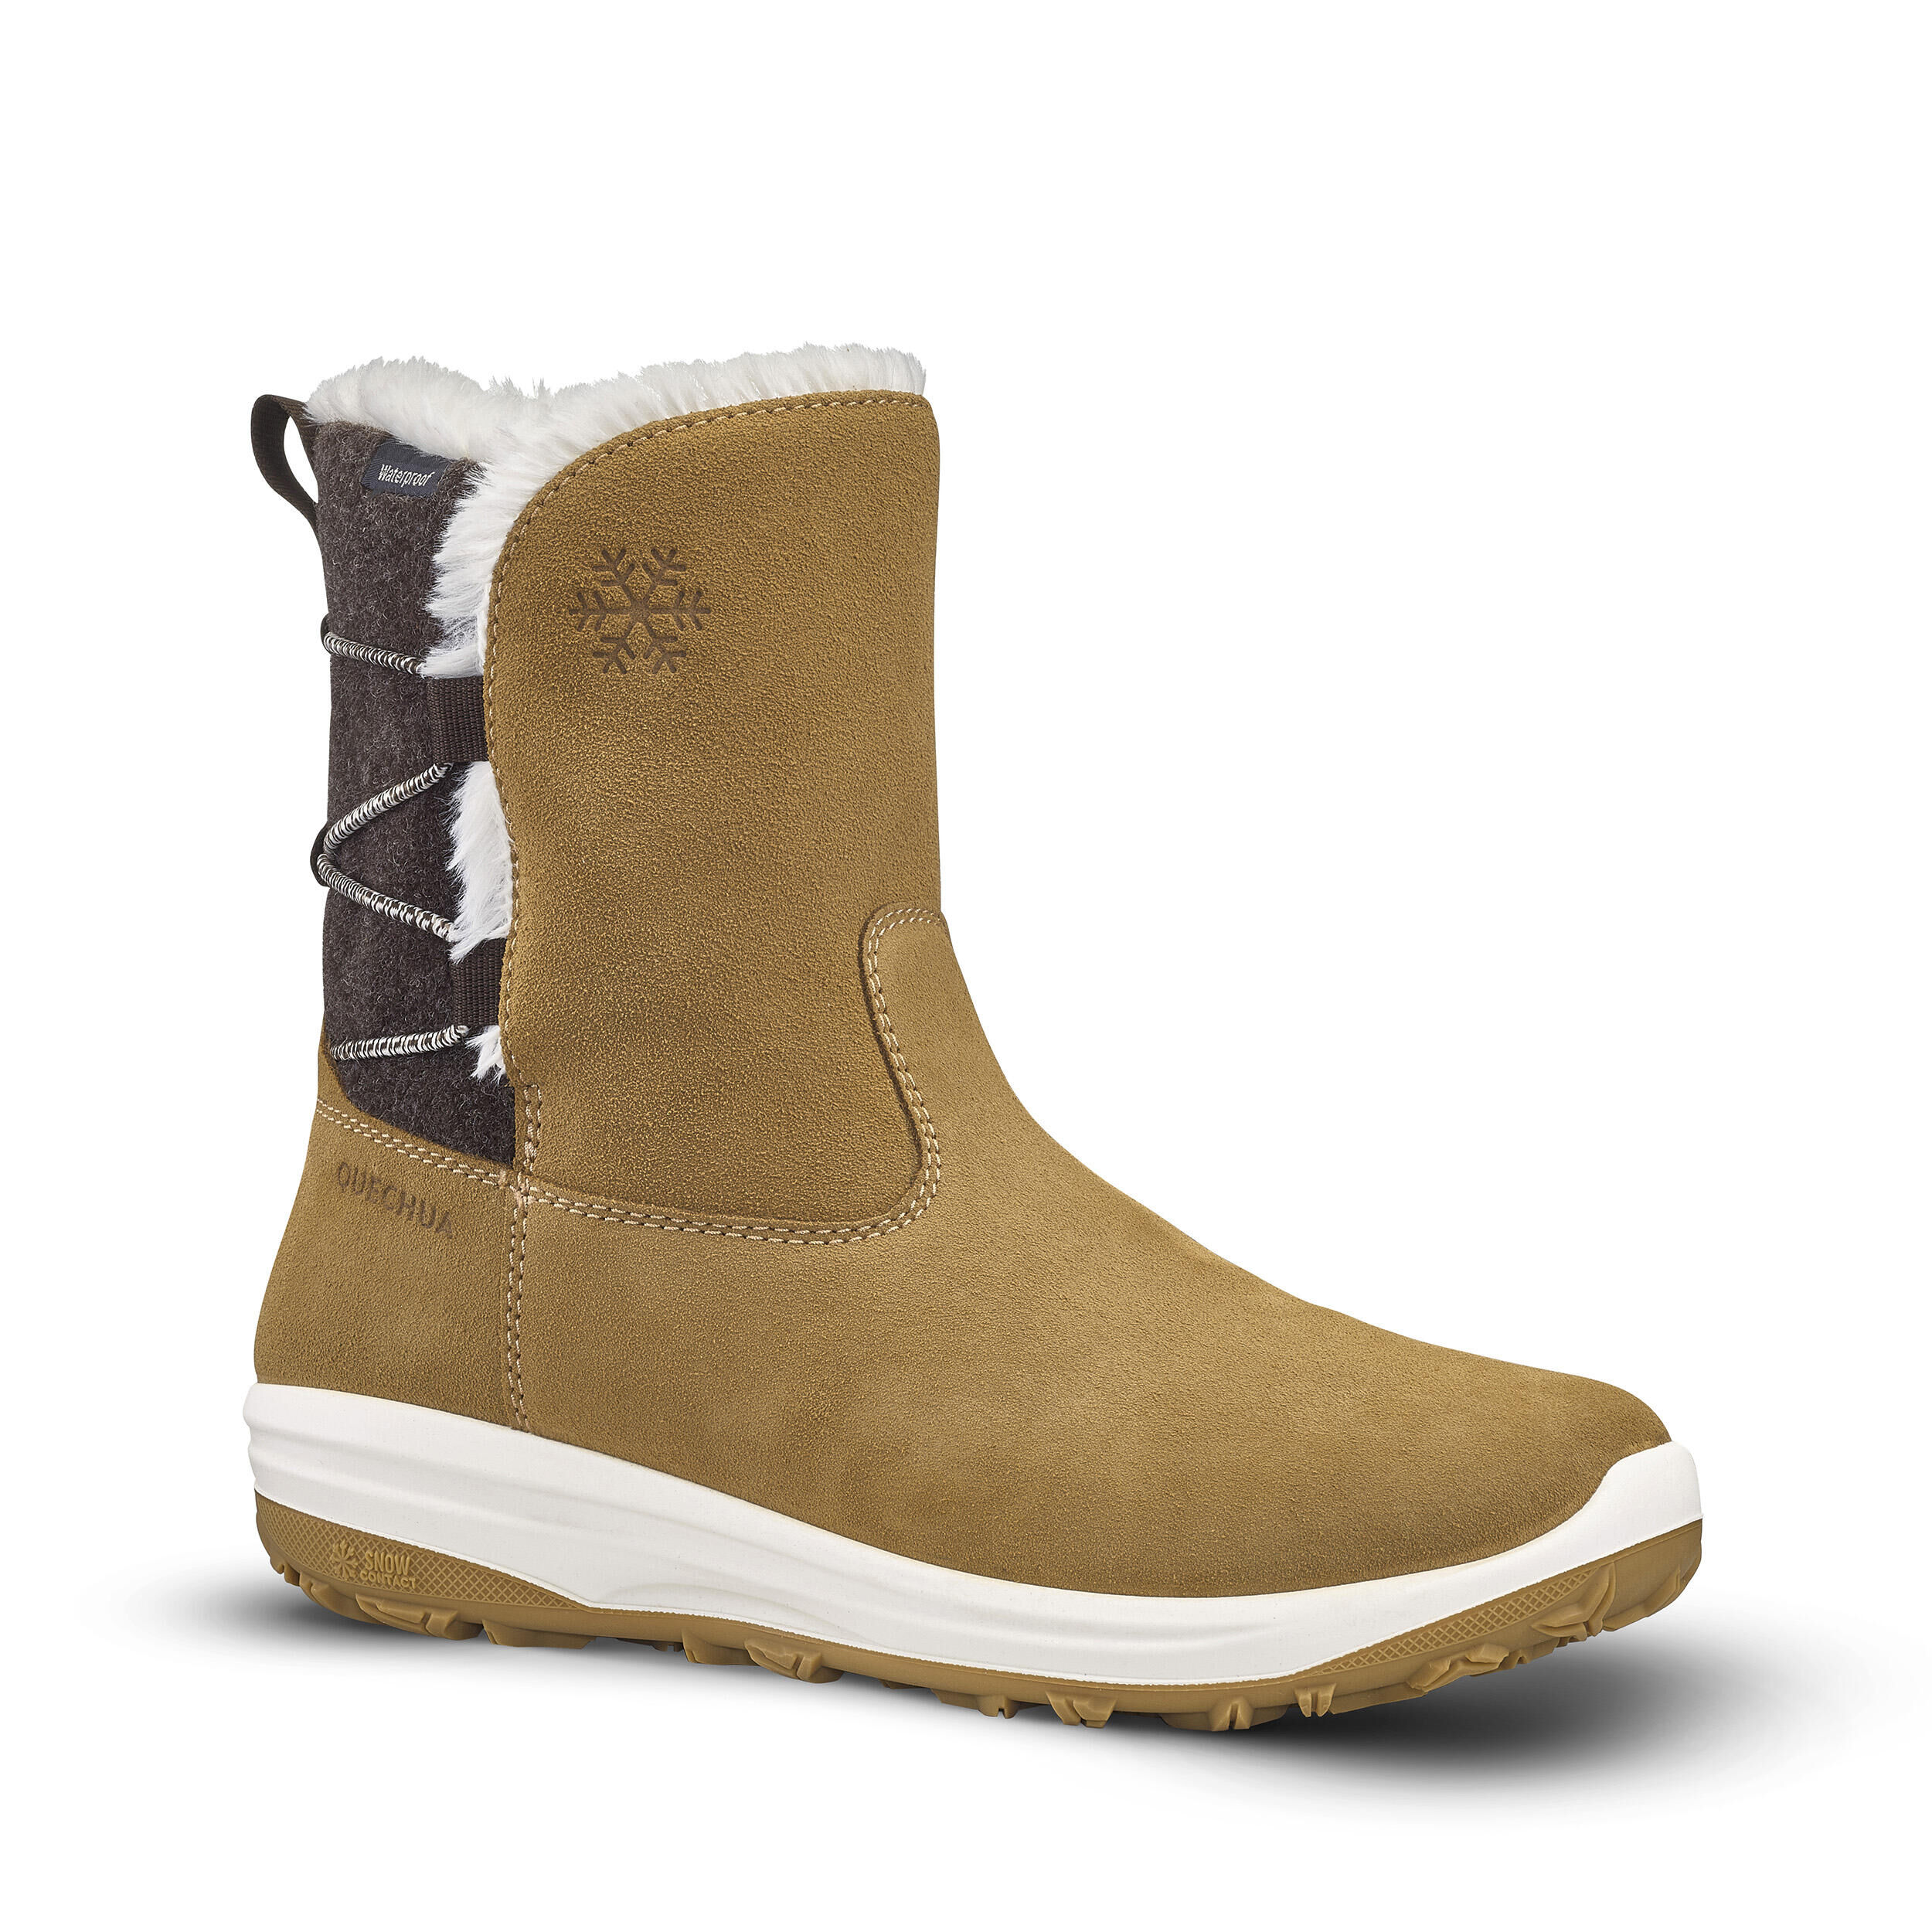 QUECHUA Women's warm waterproof snow hiking boots - SH500 leather